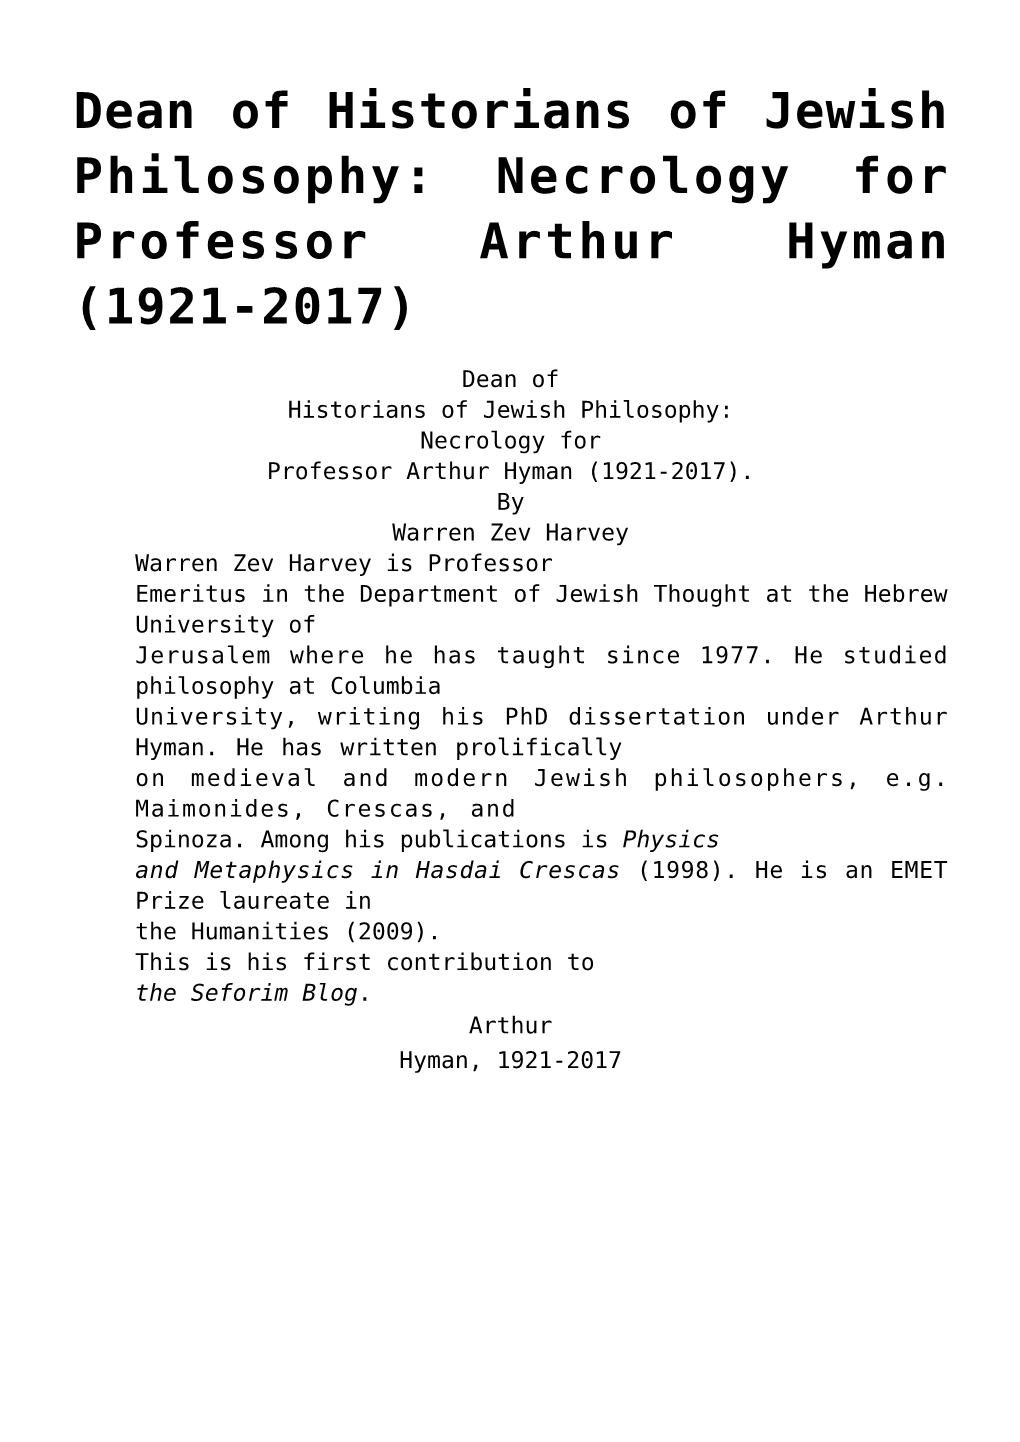 Dean of Historians of Jewish Philosophy: Necrology for Professor Arthur Hyman (1921-2017)